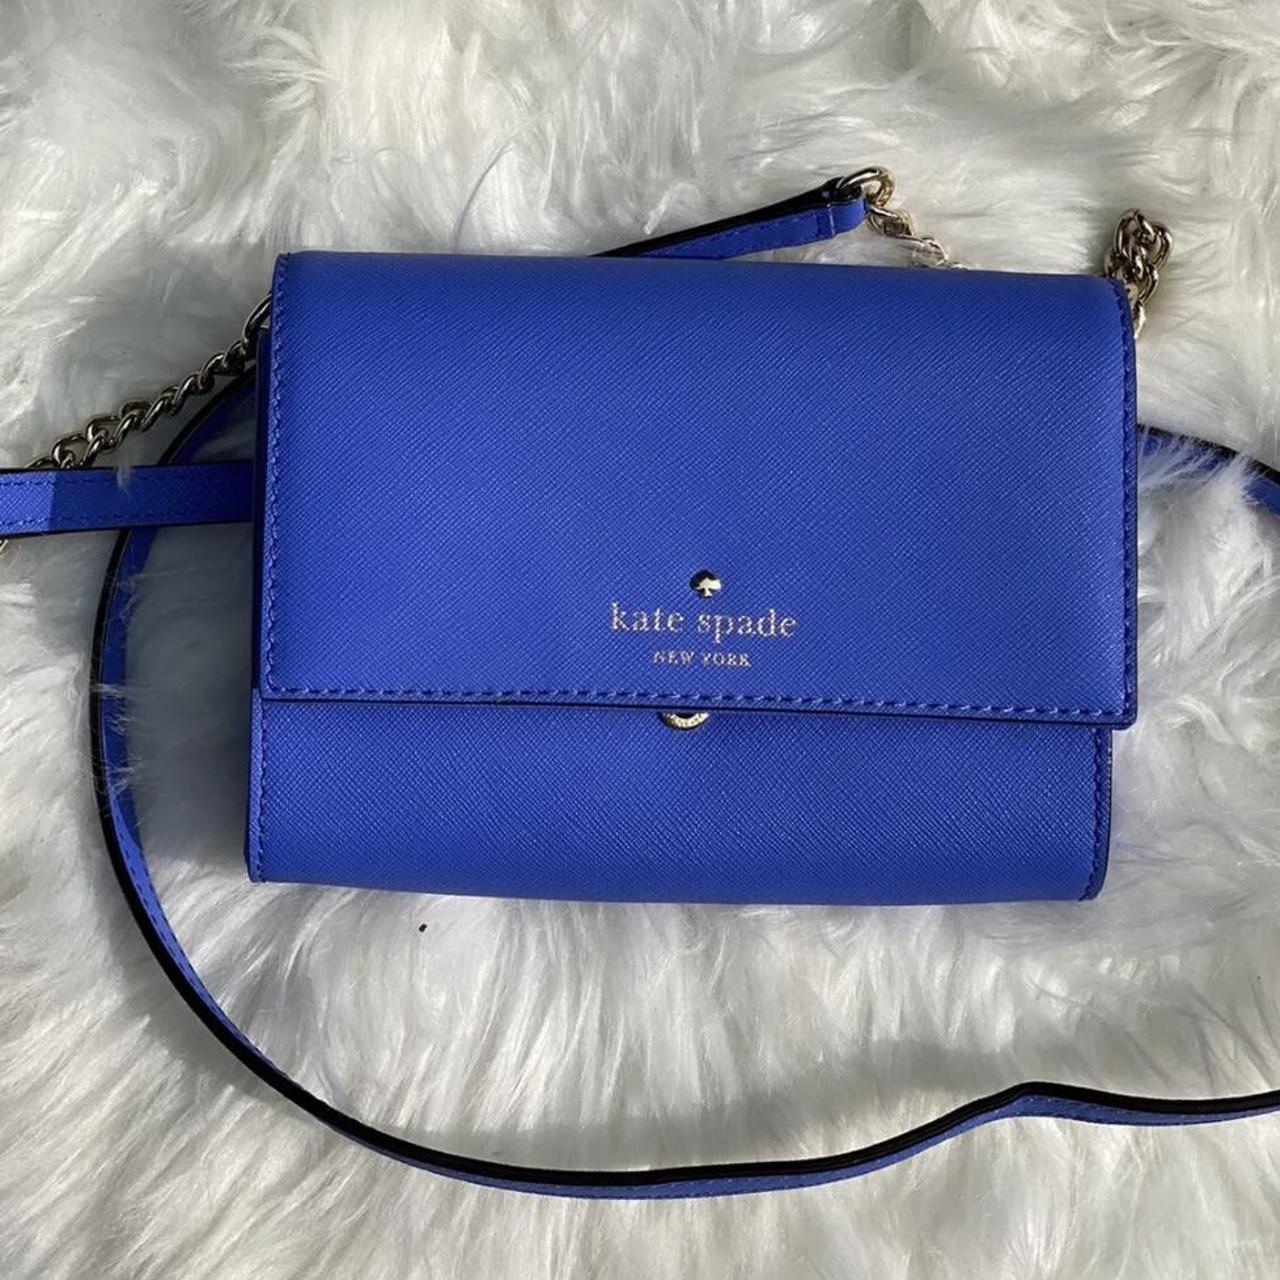 kate spade | Other | Sold Kate Spade Royal Blue Handbag Tote | Poshmark